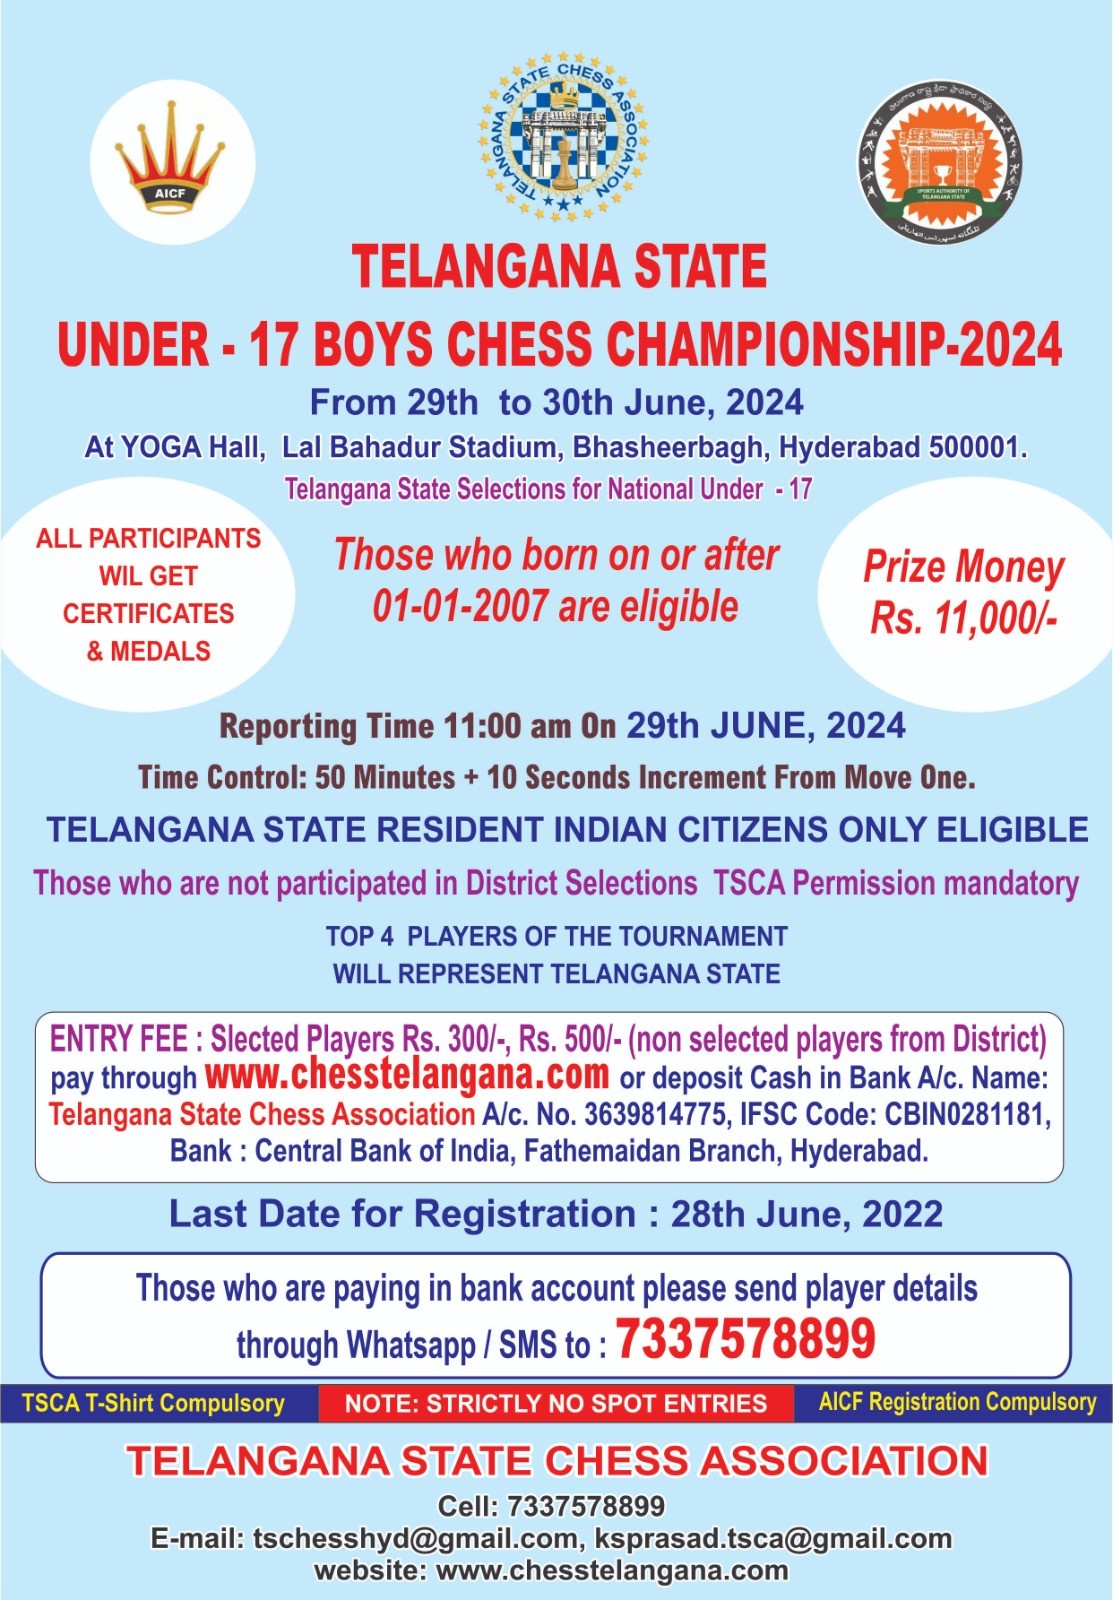 Under-17 boys chess championship